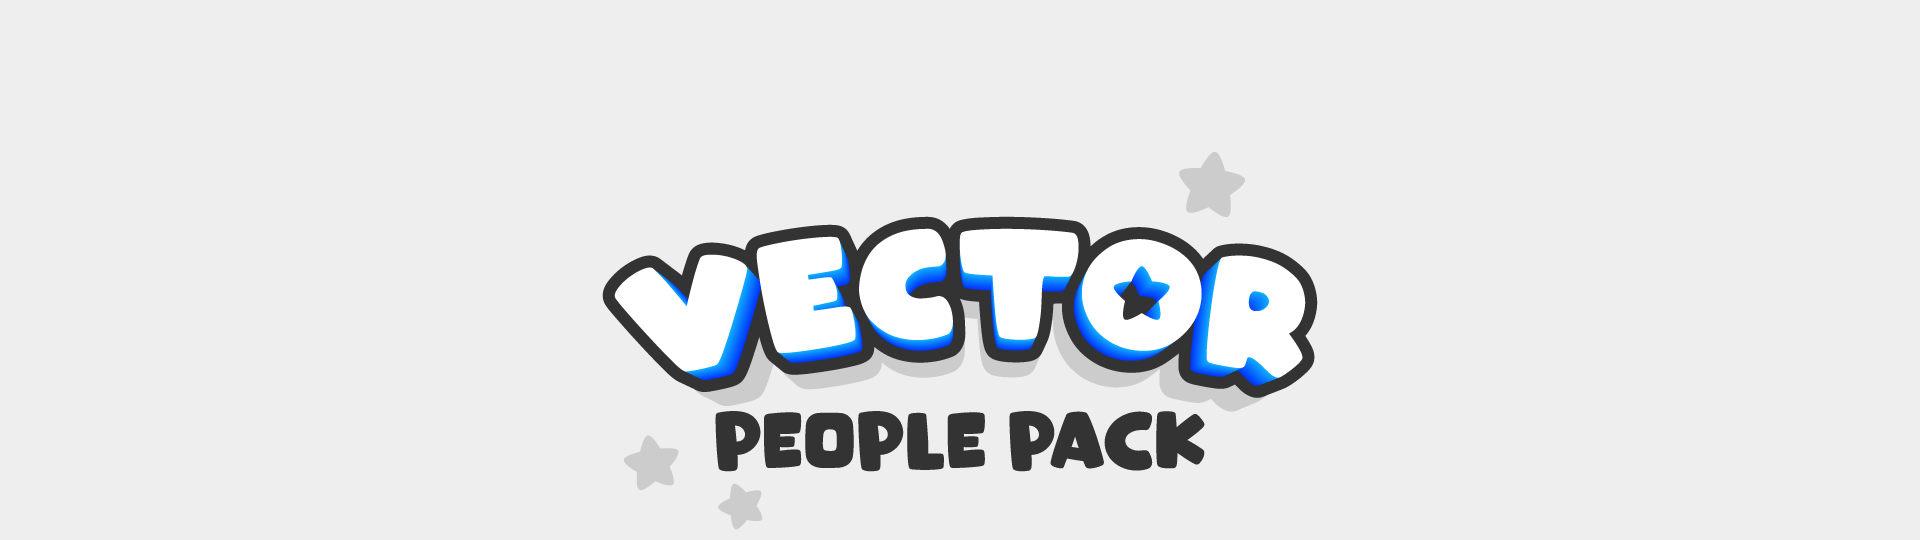 Vector People Pack